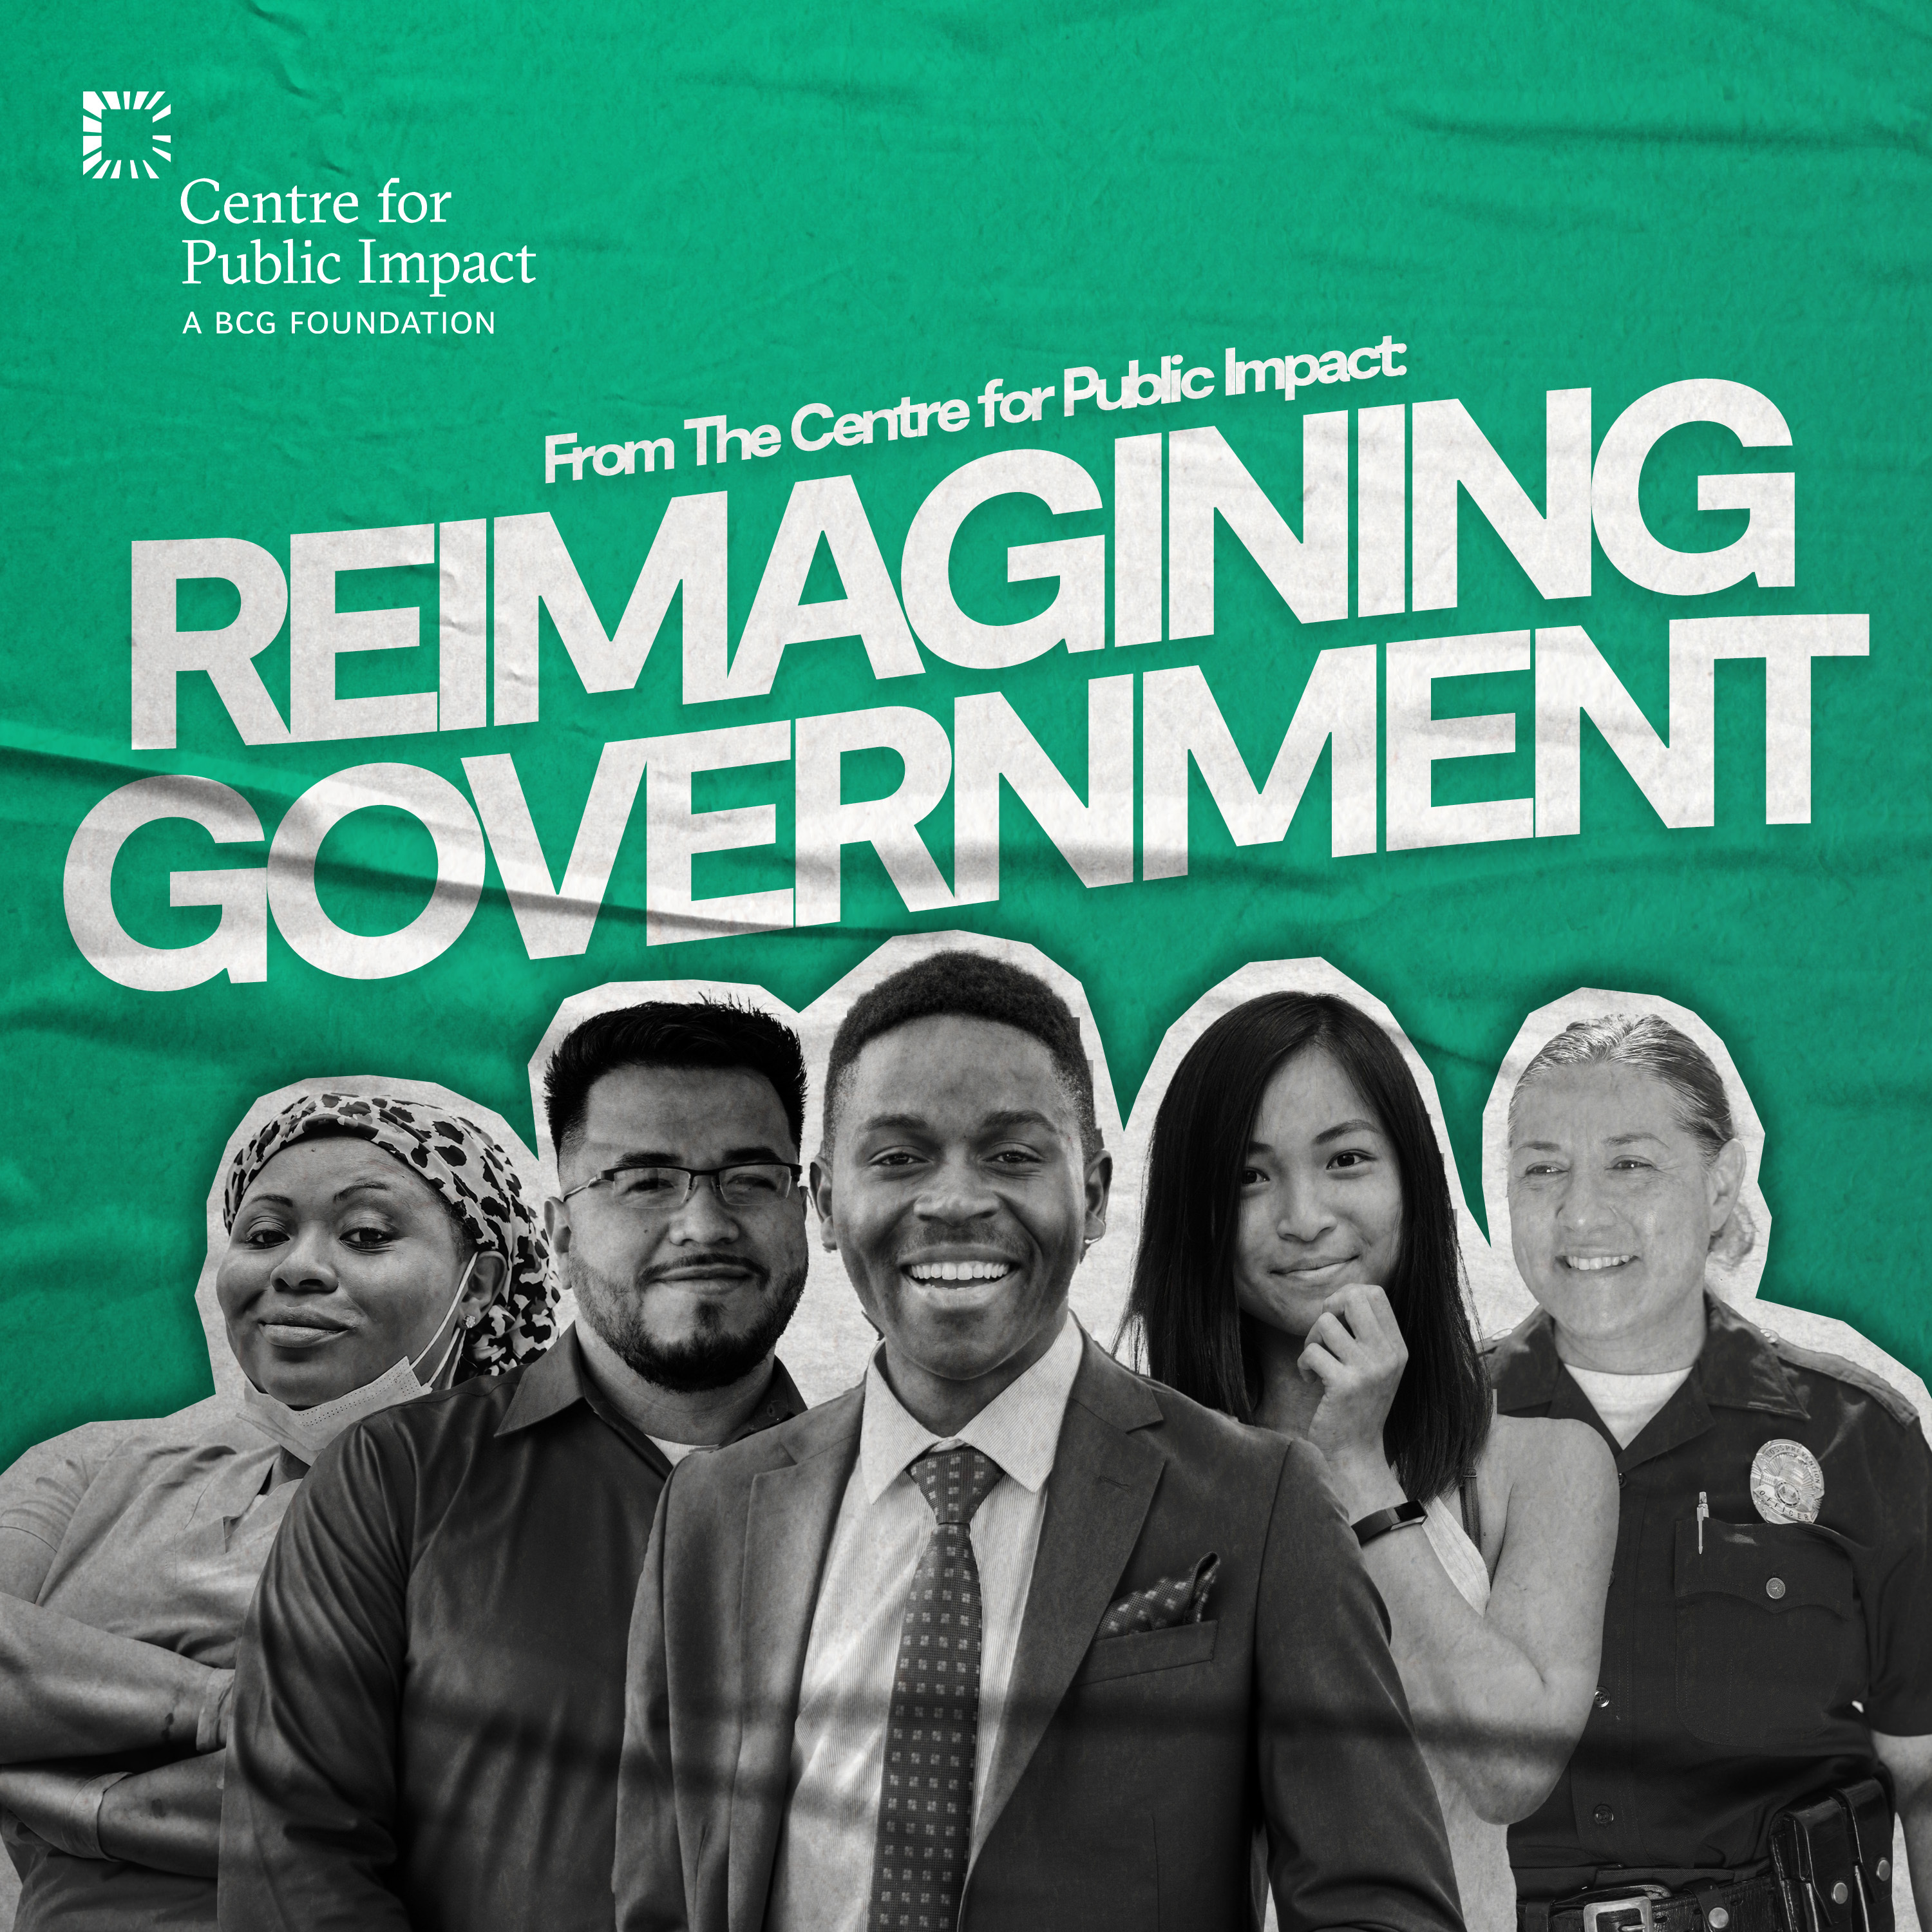 https://www.centreforpublicimpact.org/assets/reimagining-government-podcast-artwork.jpg